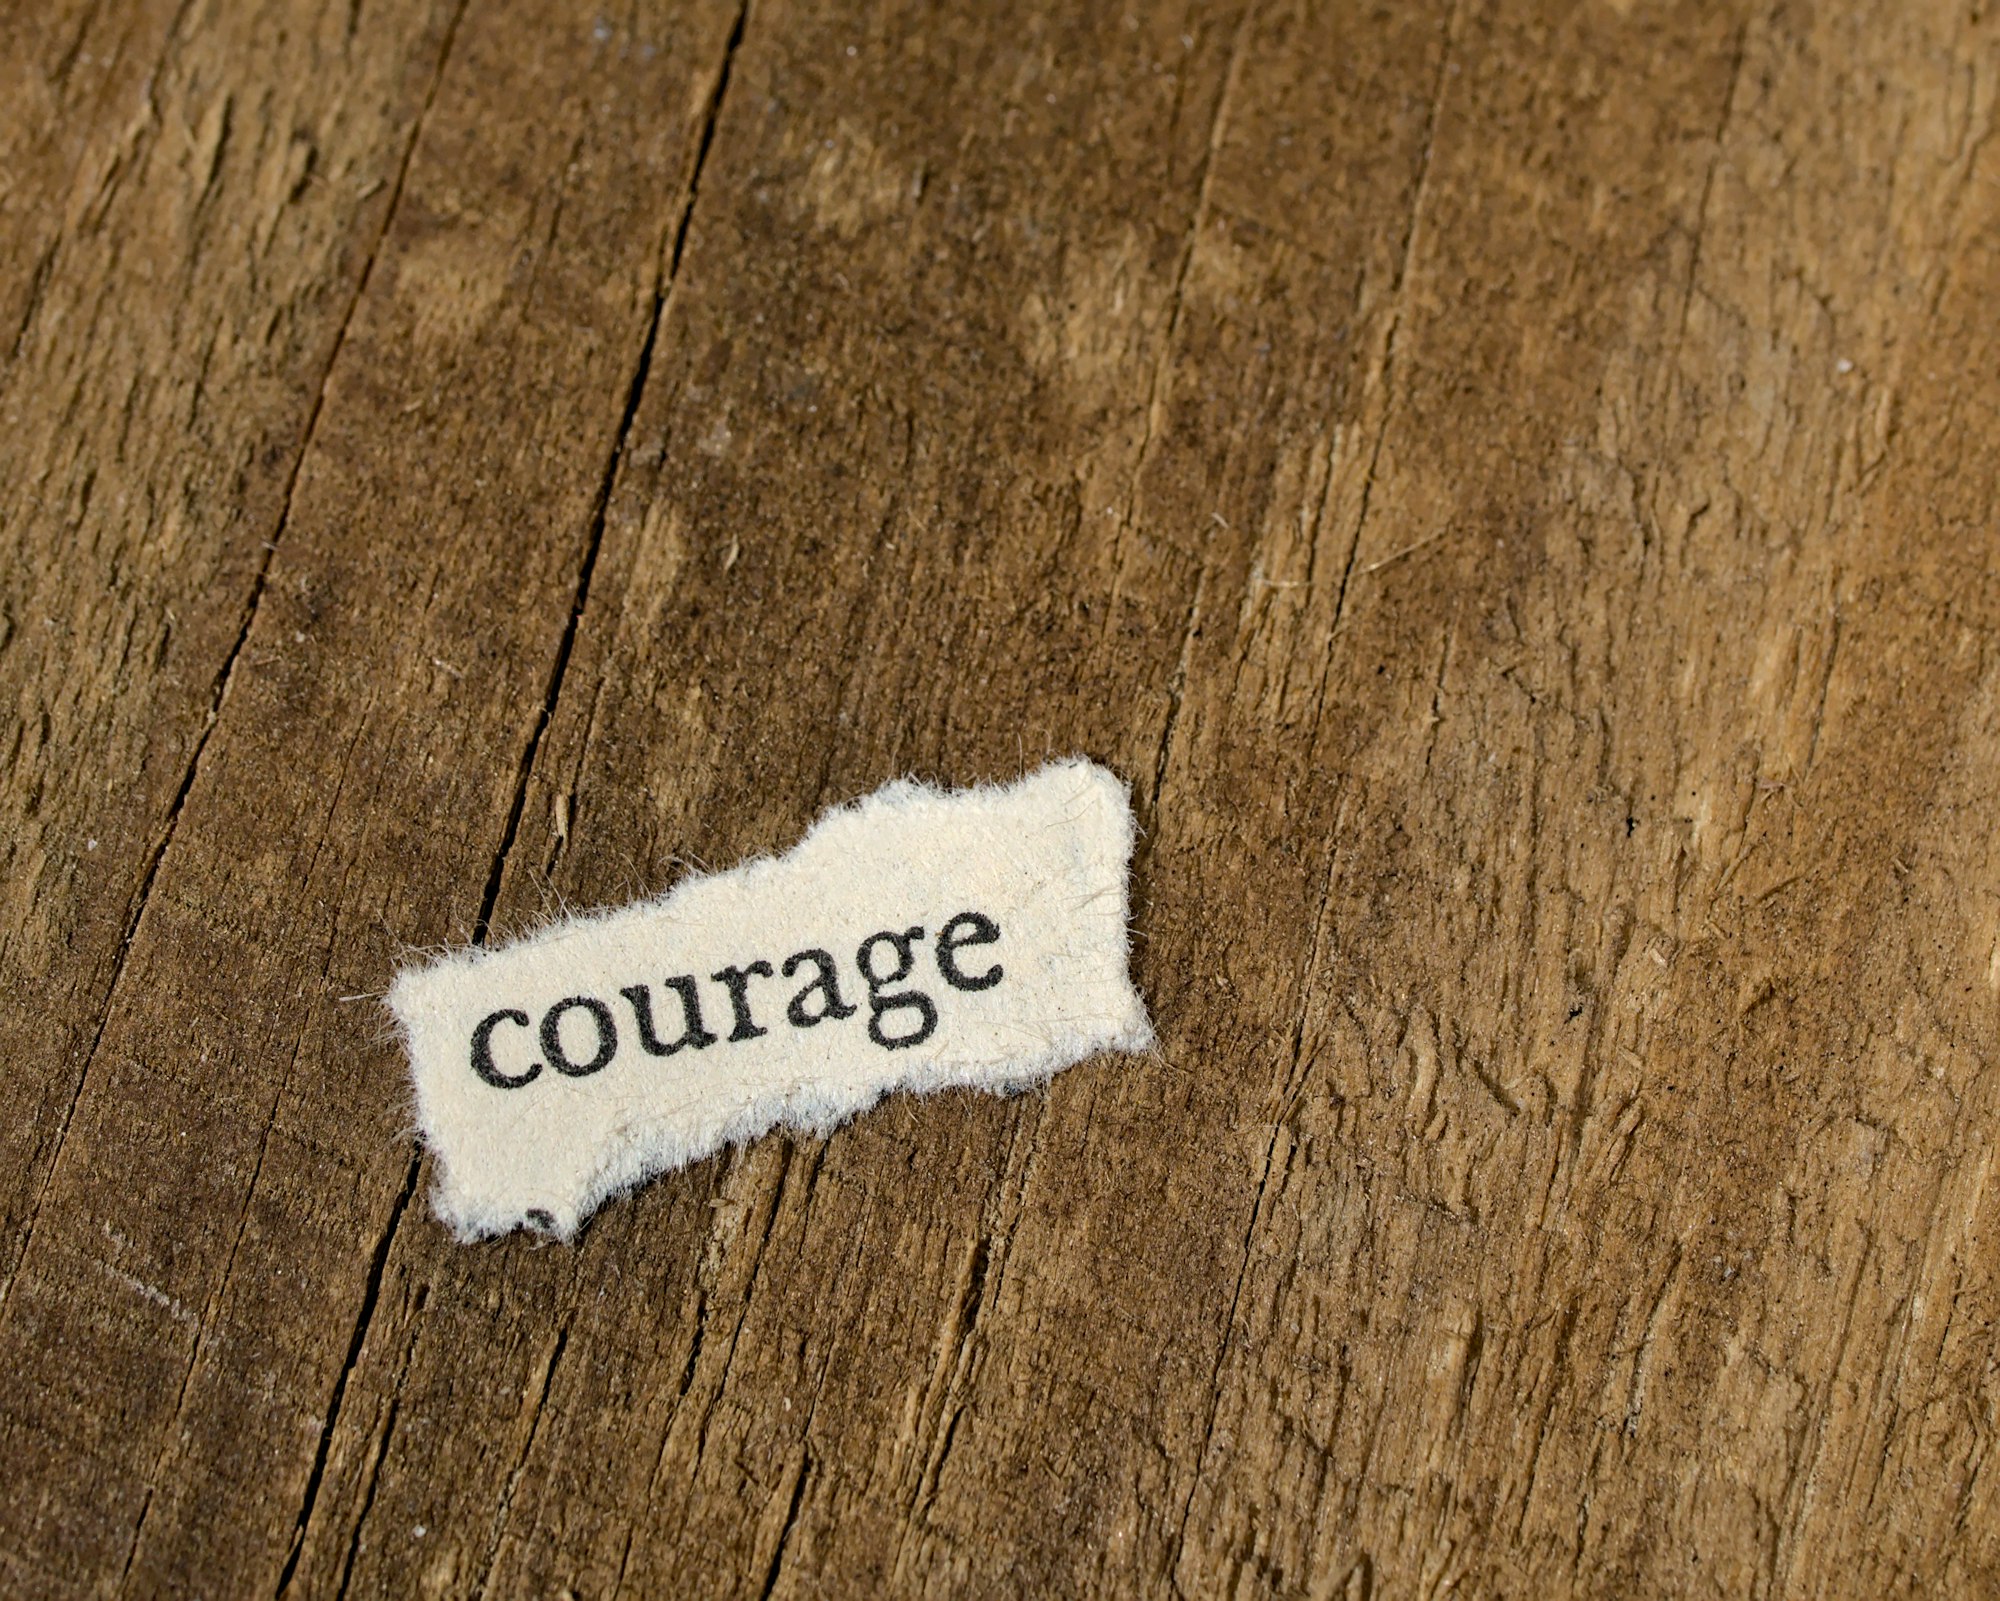 Blog Image: Courage